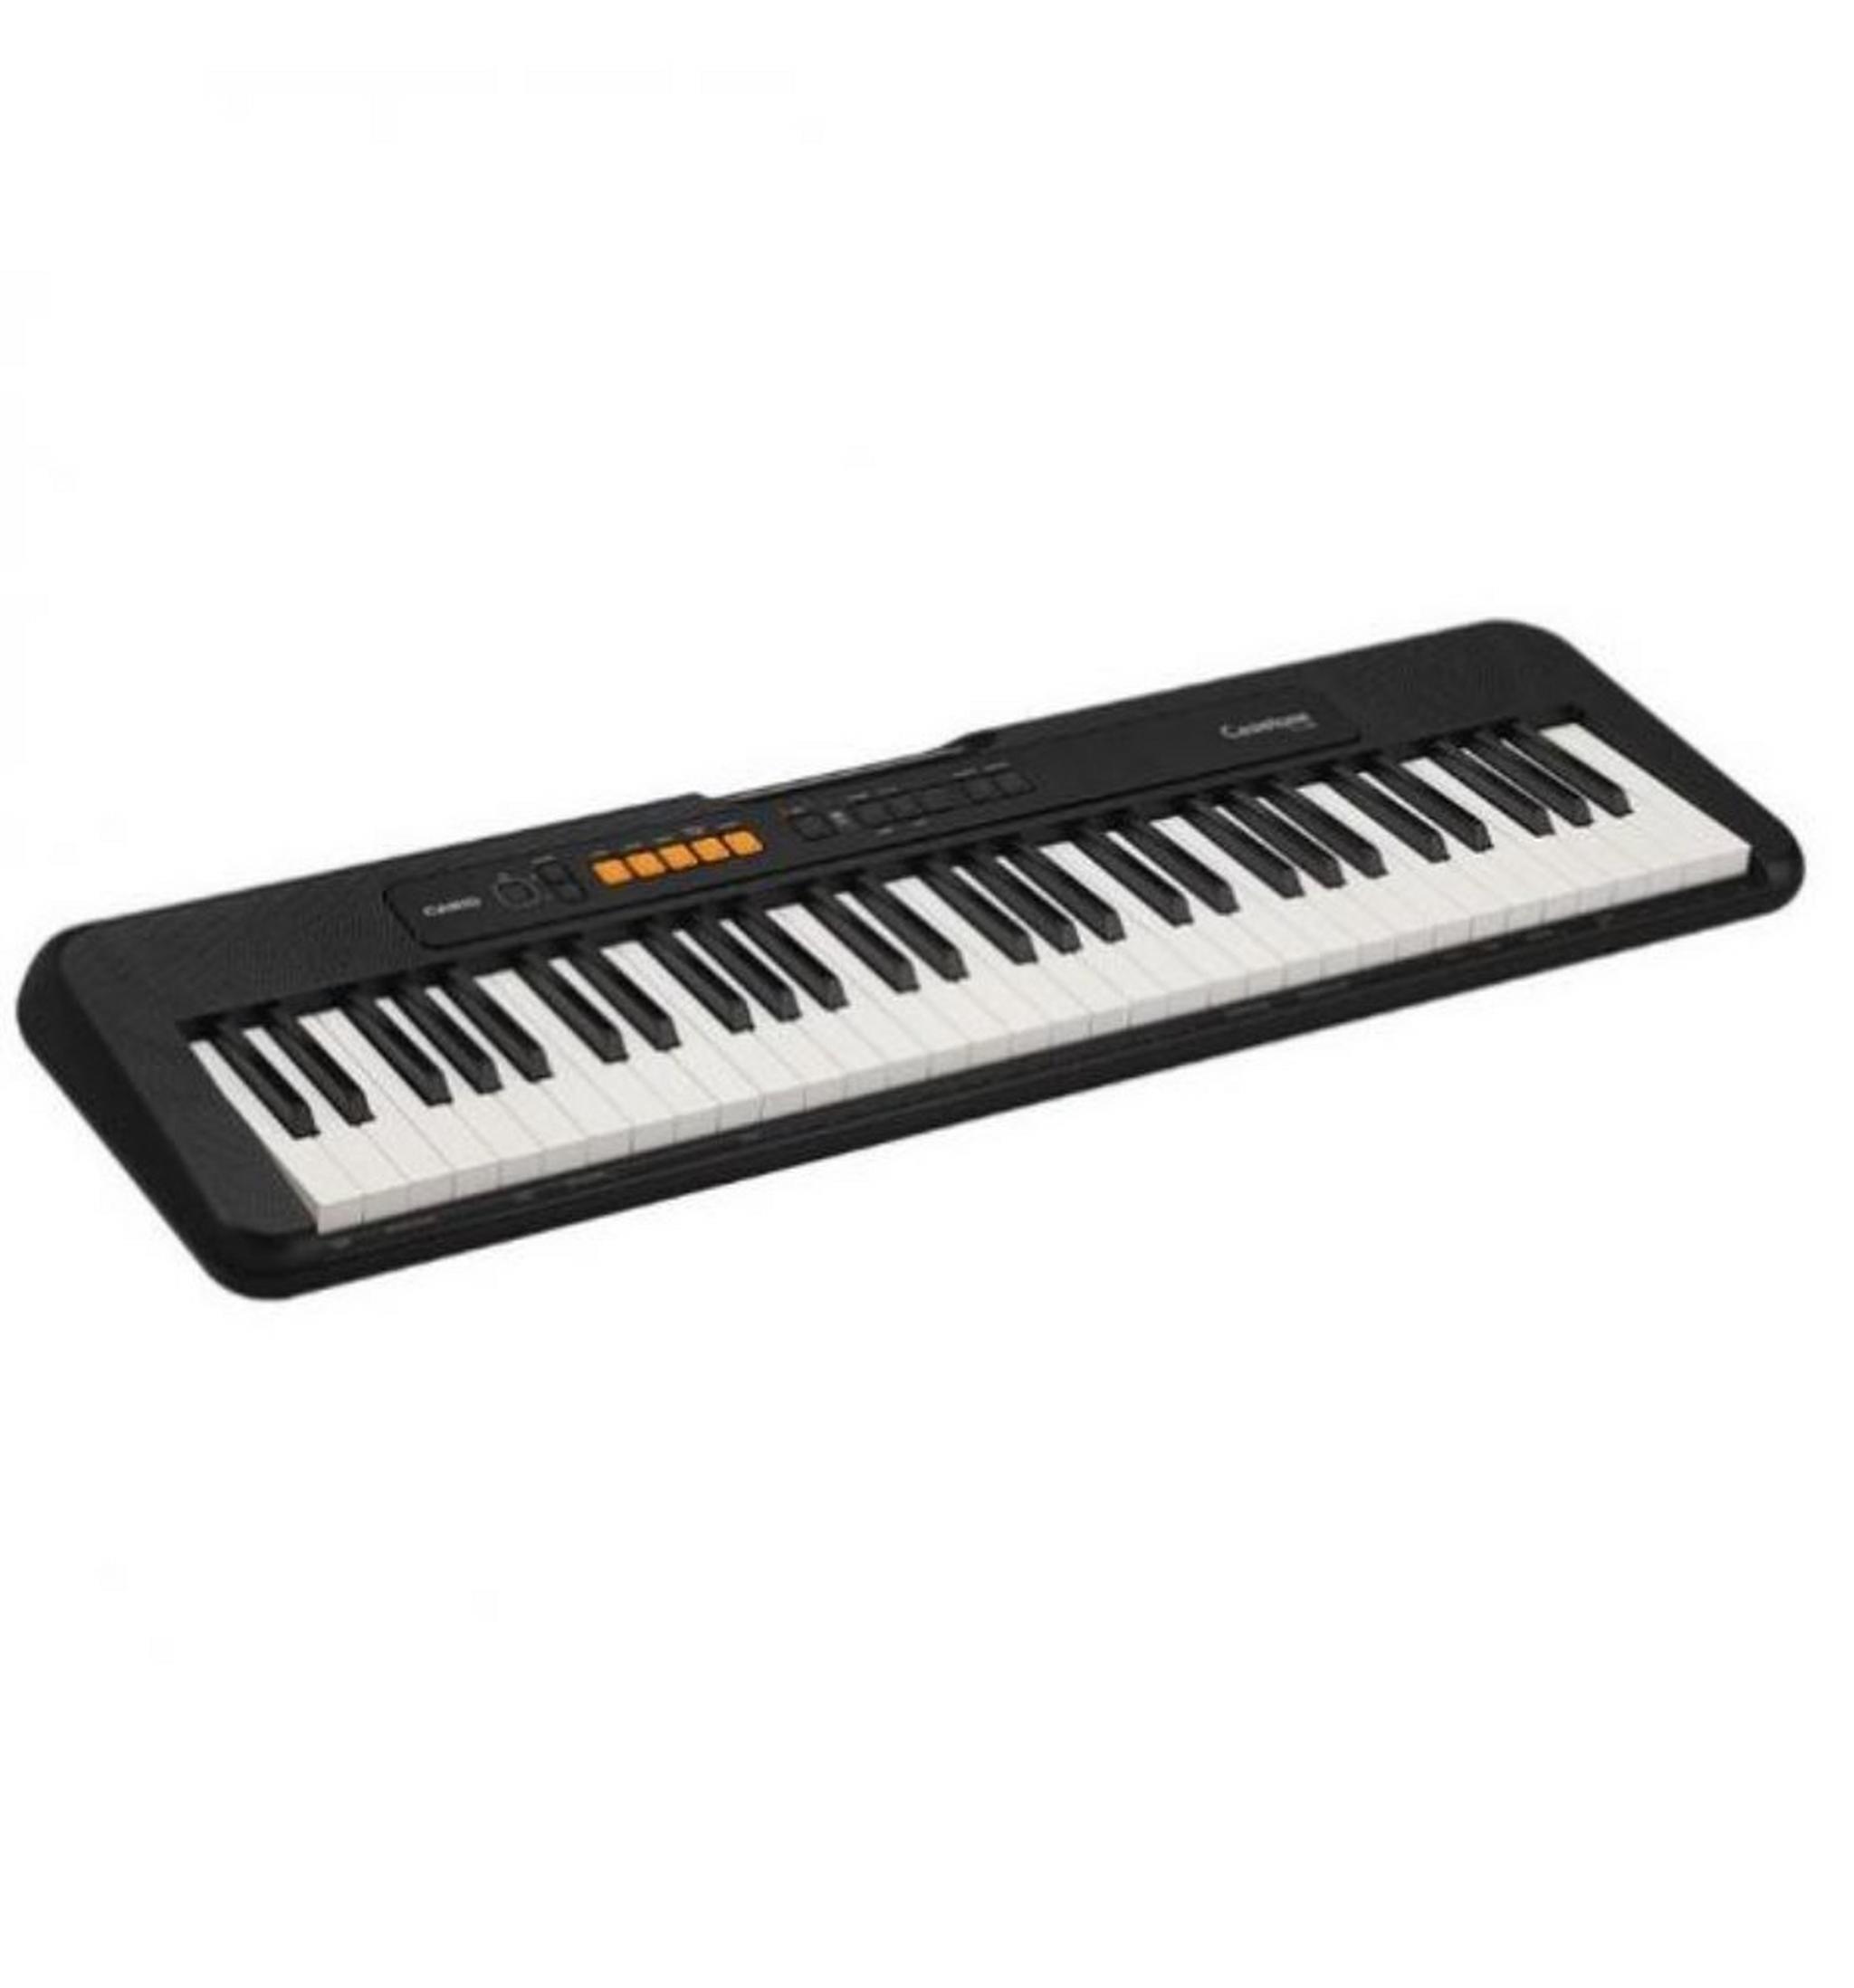 Casio 61 Key Portable Musical Keyboard (CT-S200BKC2) - Black